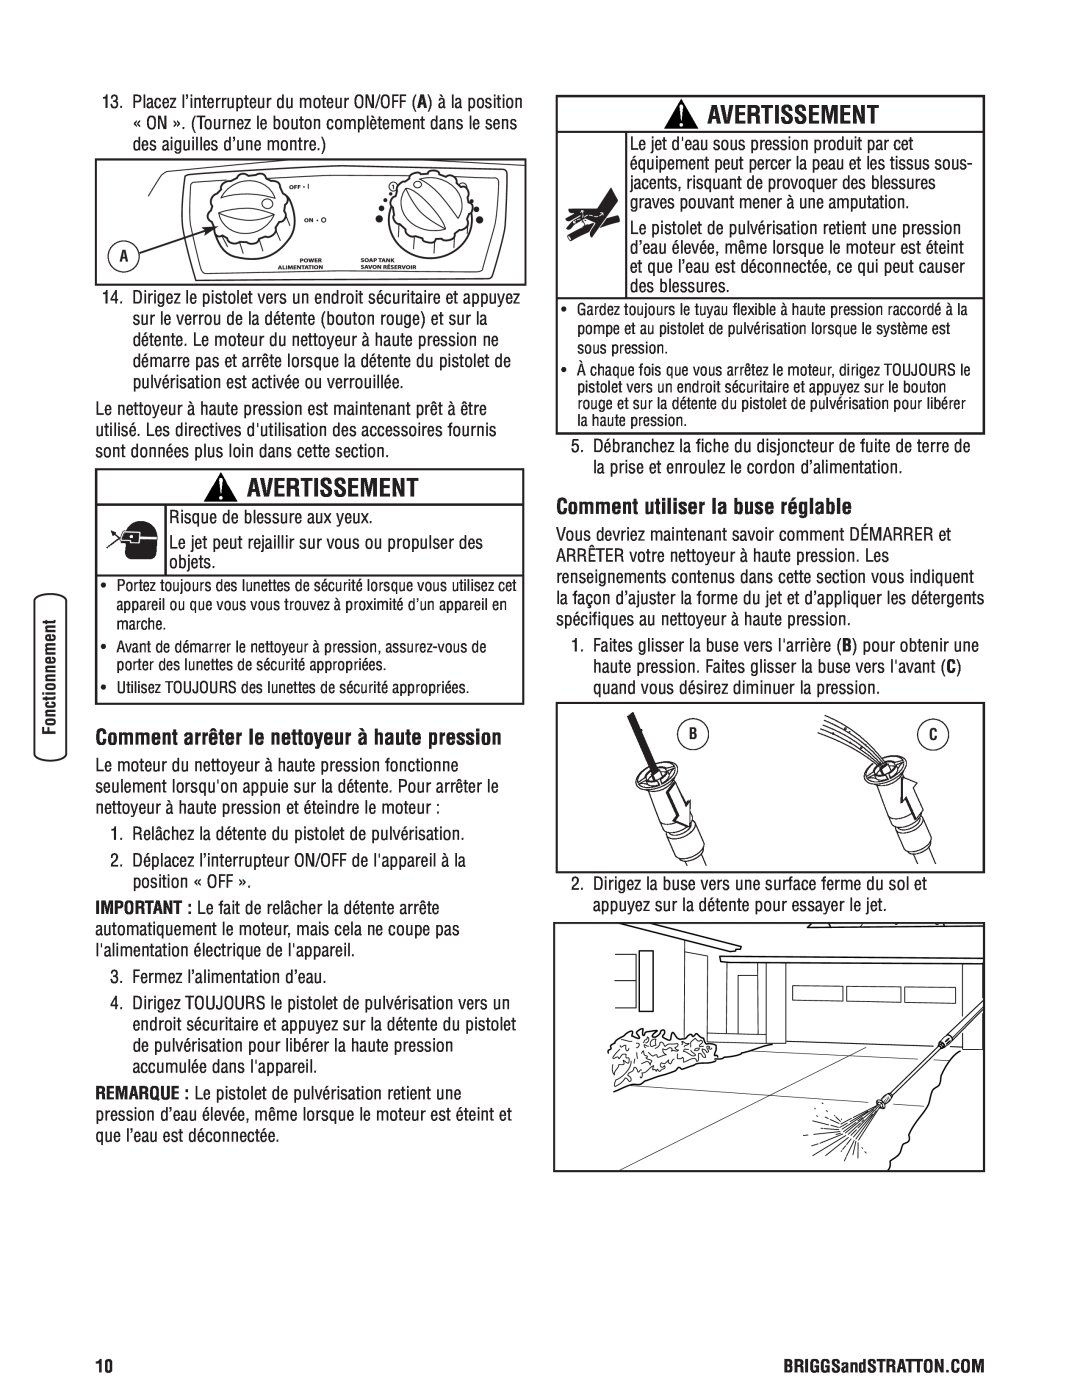 Briggs & Stratton Electric Pressure Washer manual Comment utiliser la buse réglable, Avertissement 